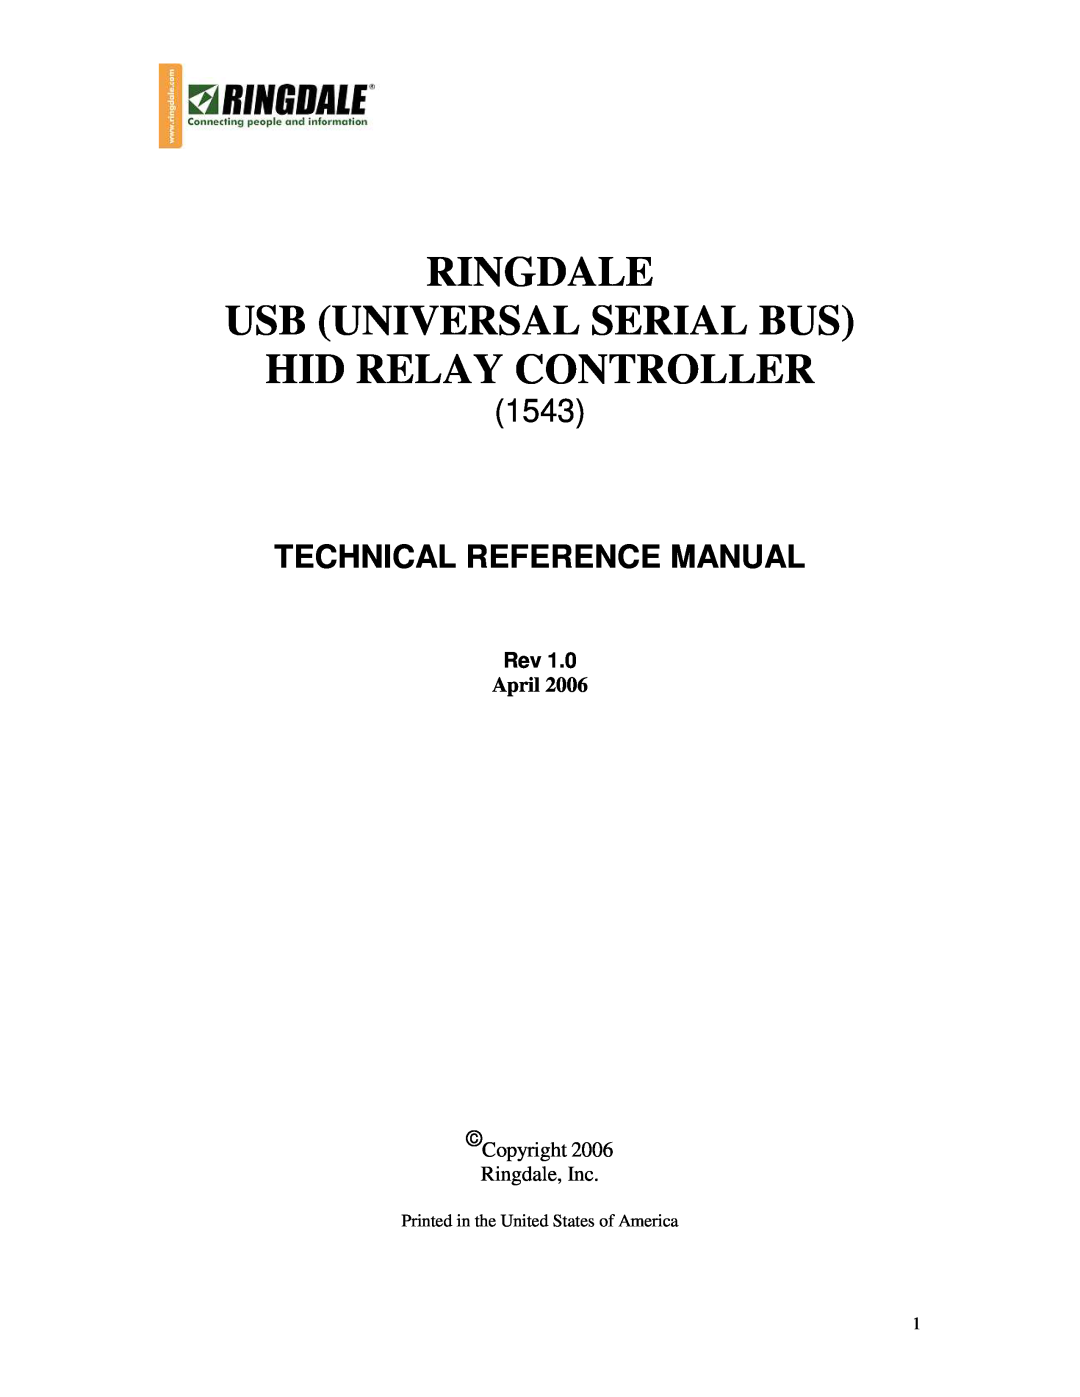 Ringdale 1543 manual April, Ringdale Usb Universal Serial Bus Hid Relay Controller, Technical Reference Manual 